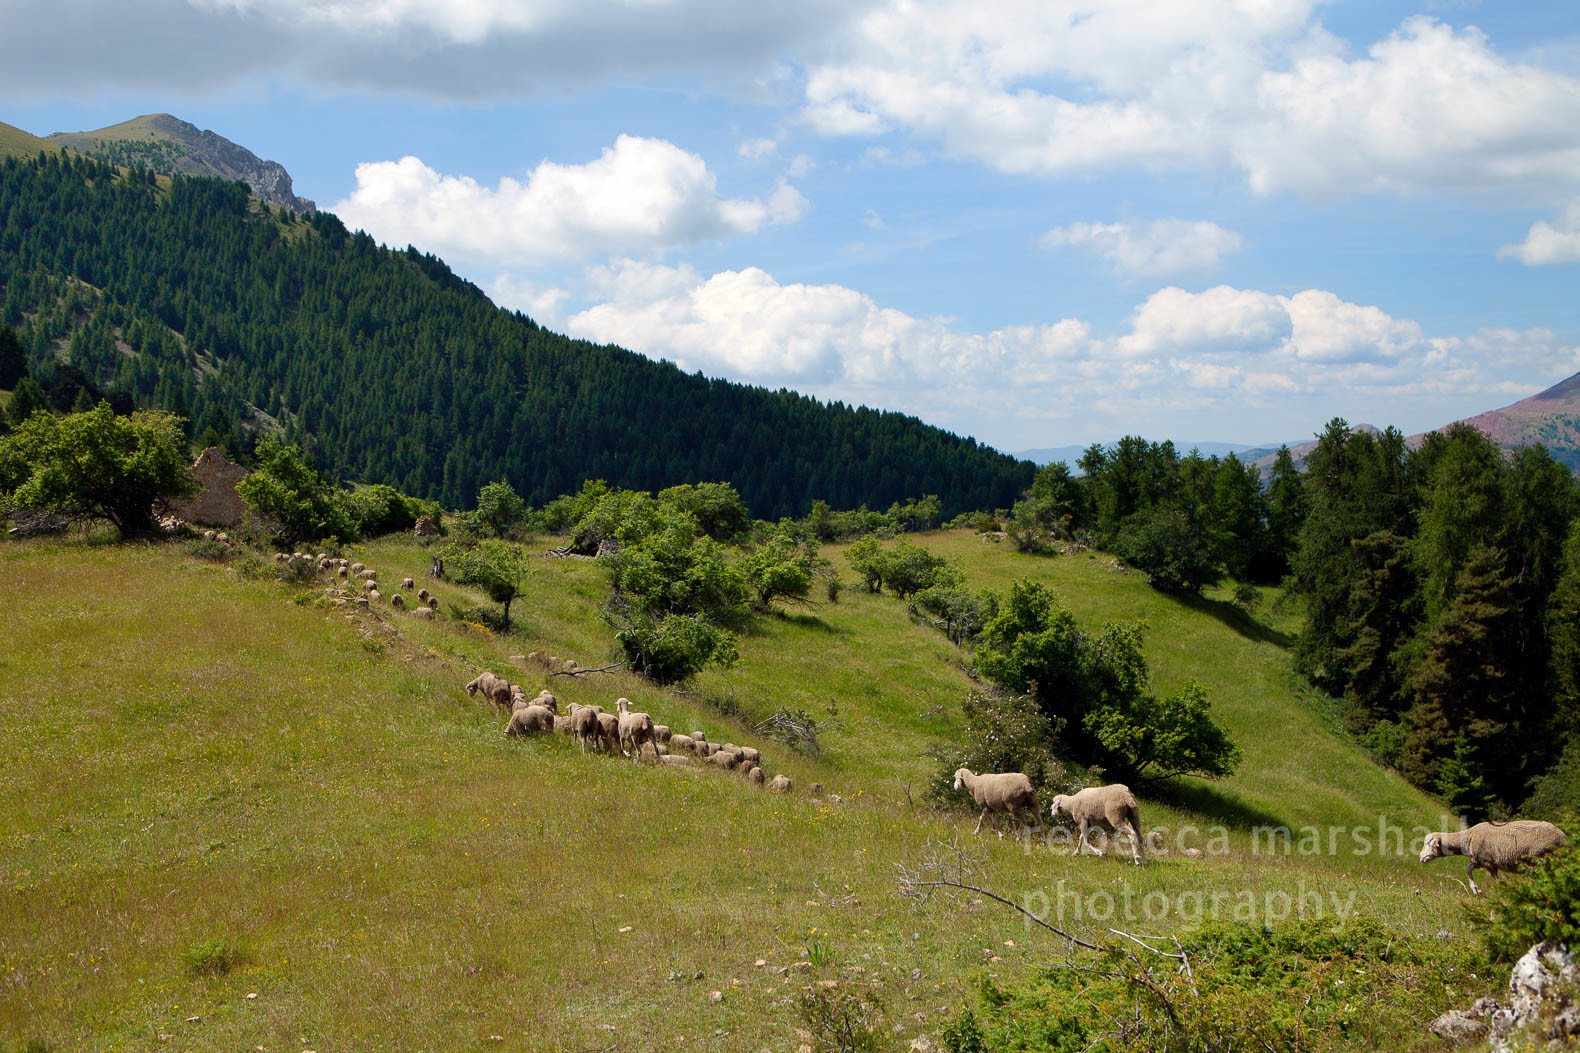 Photograph of sheep walking single file through green mountain pasture